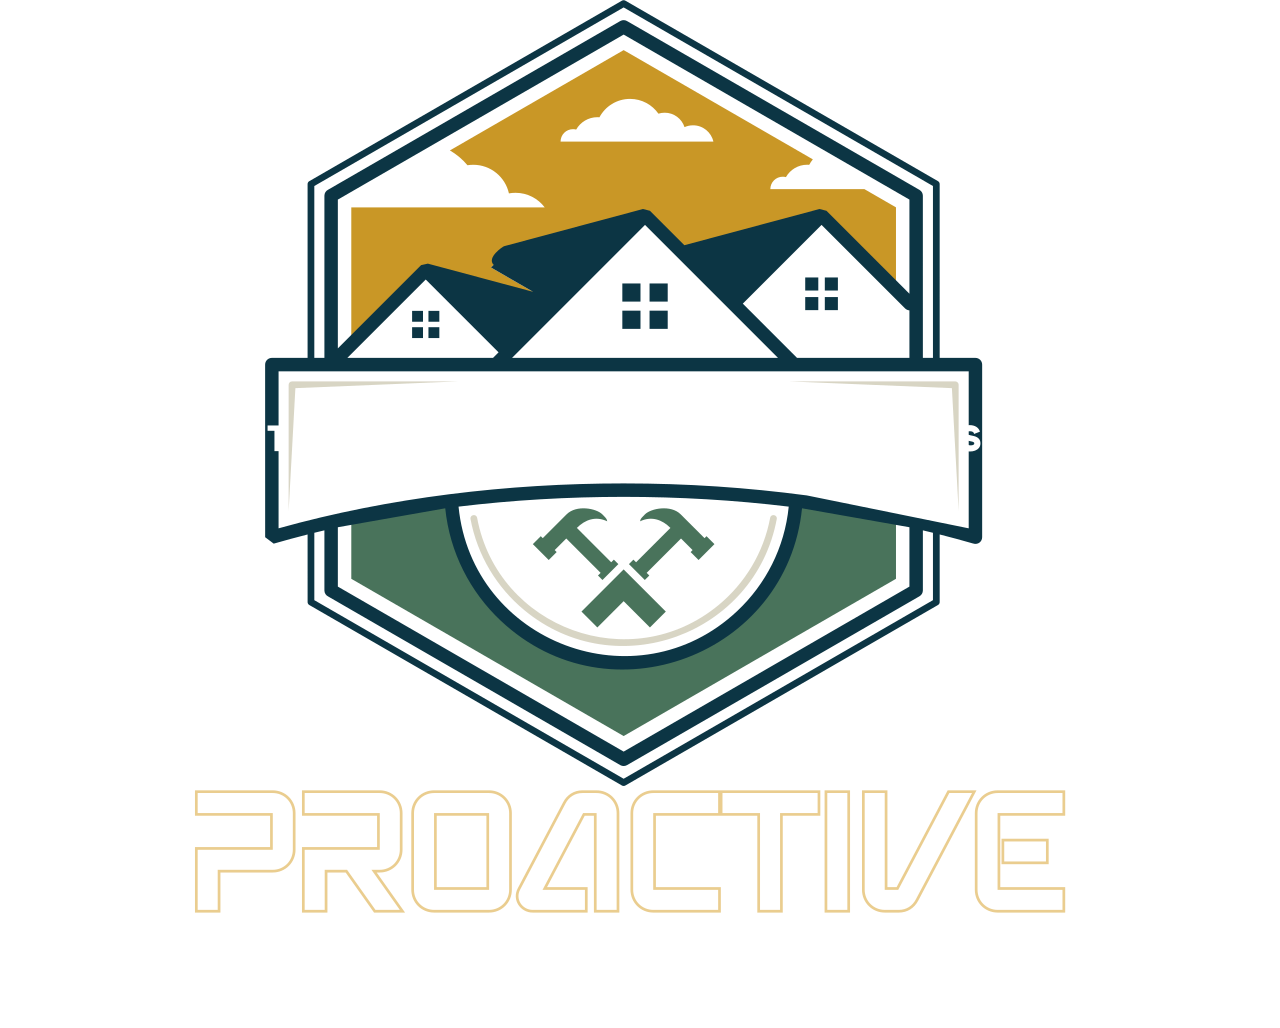 Proactive 's logo